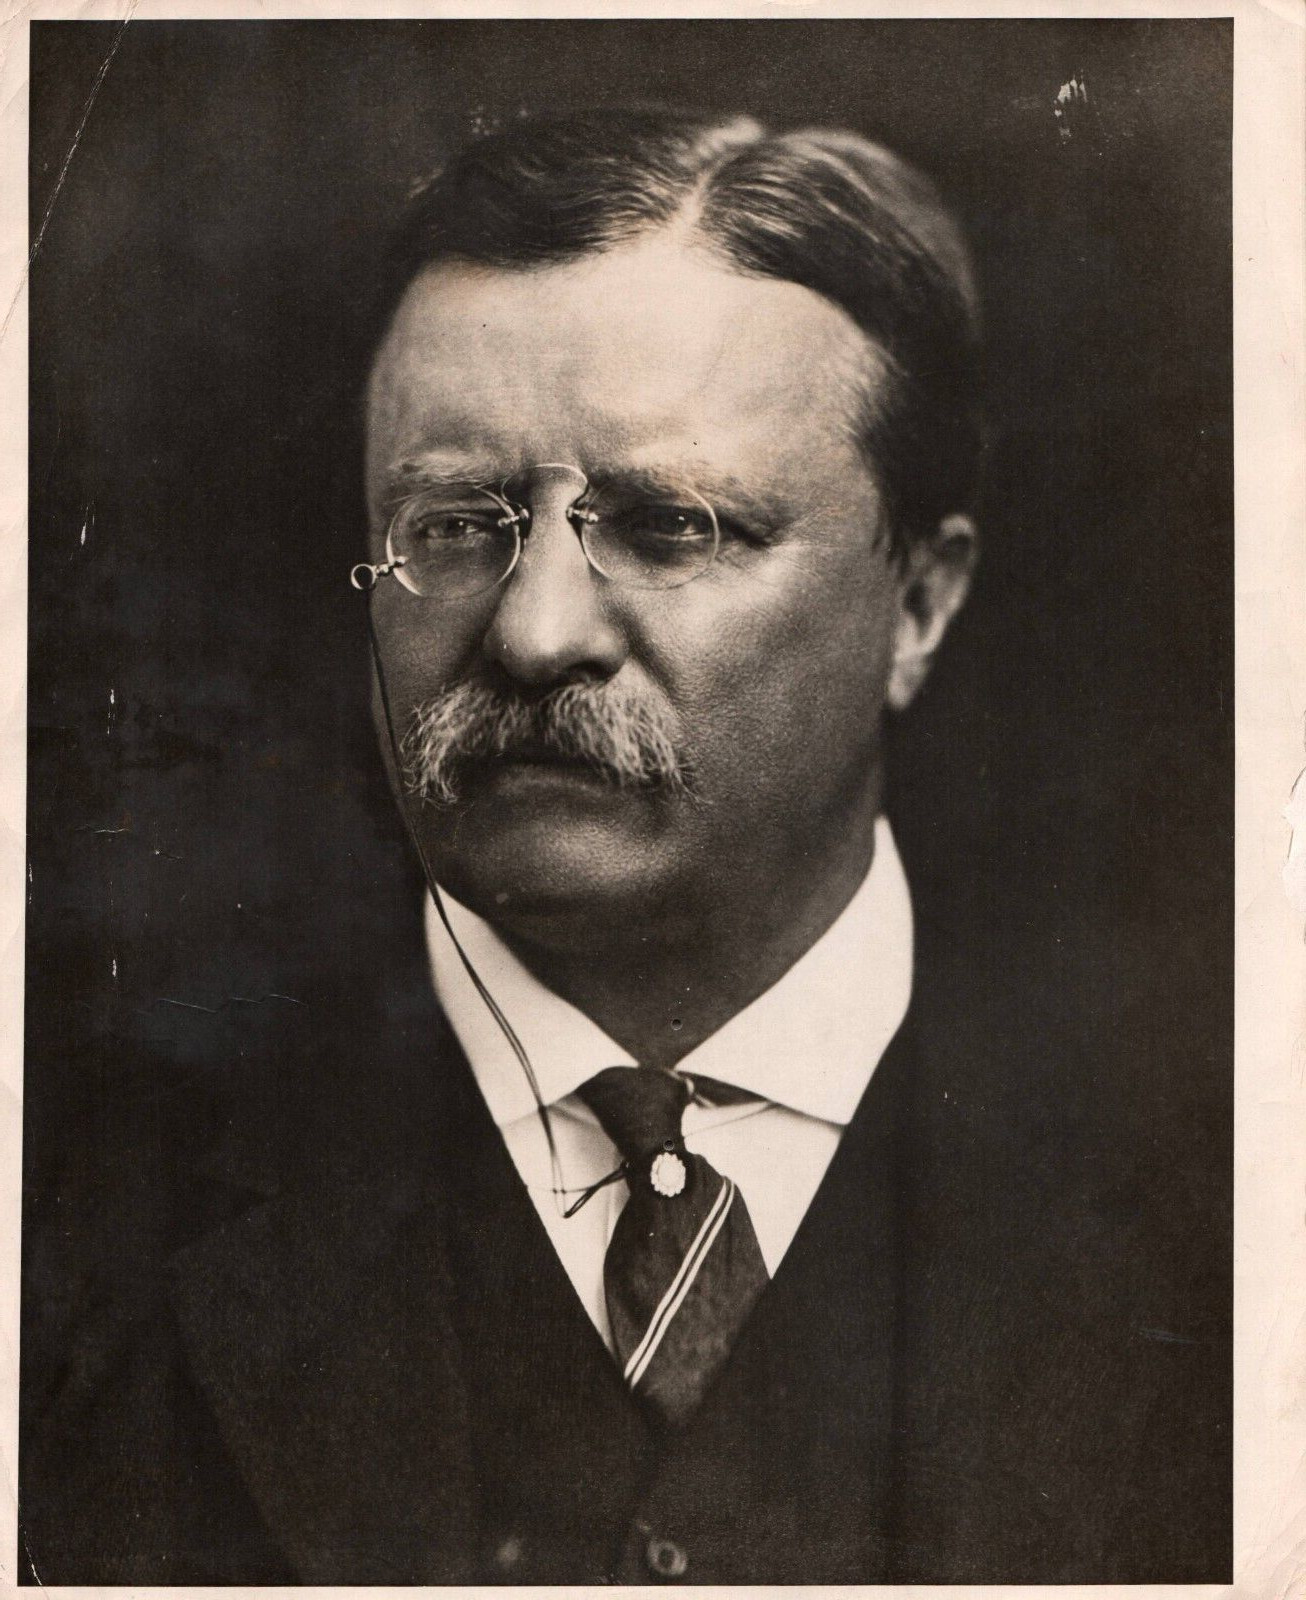 RARE 1910s US PRESIDENT THEODORE ROOSEVELT TYPE I PORTRAIT ORIGINAL PHOTO 217